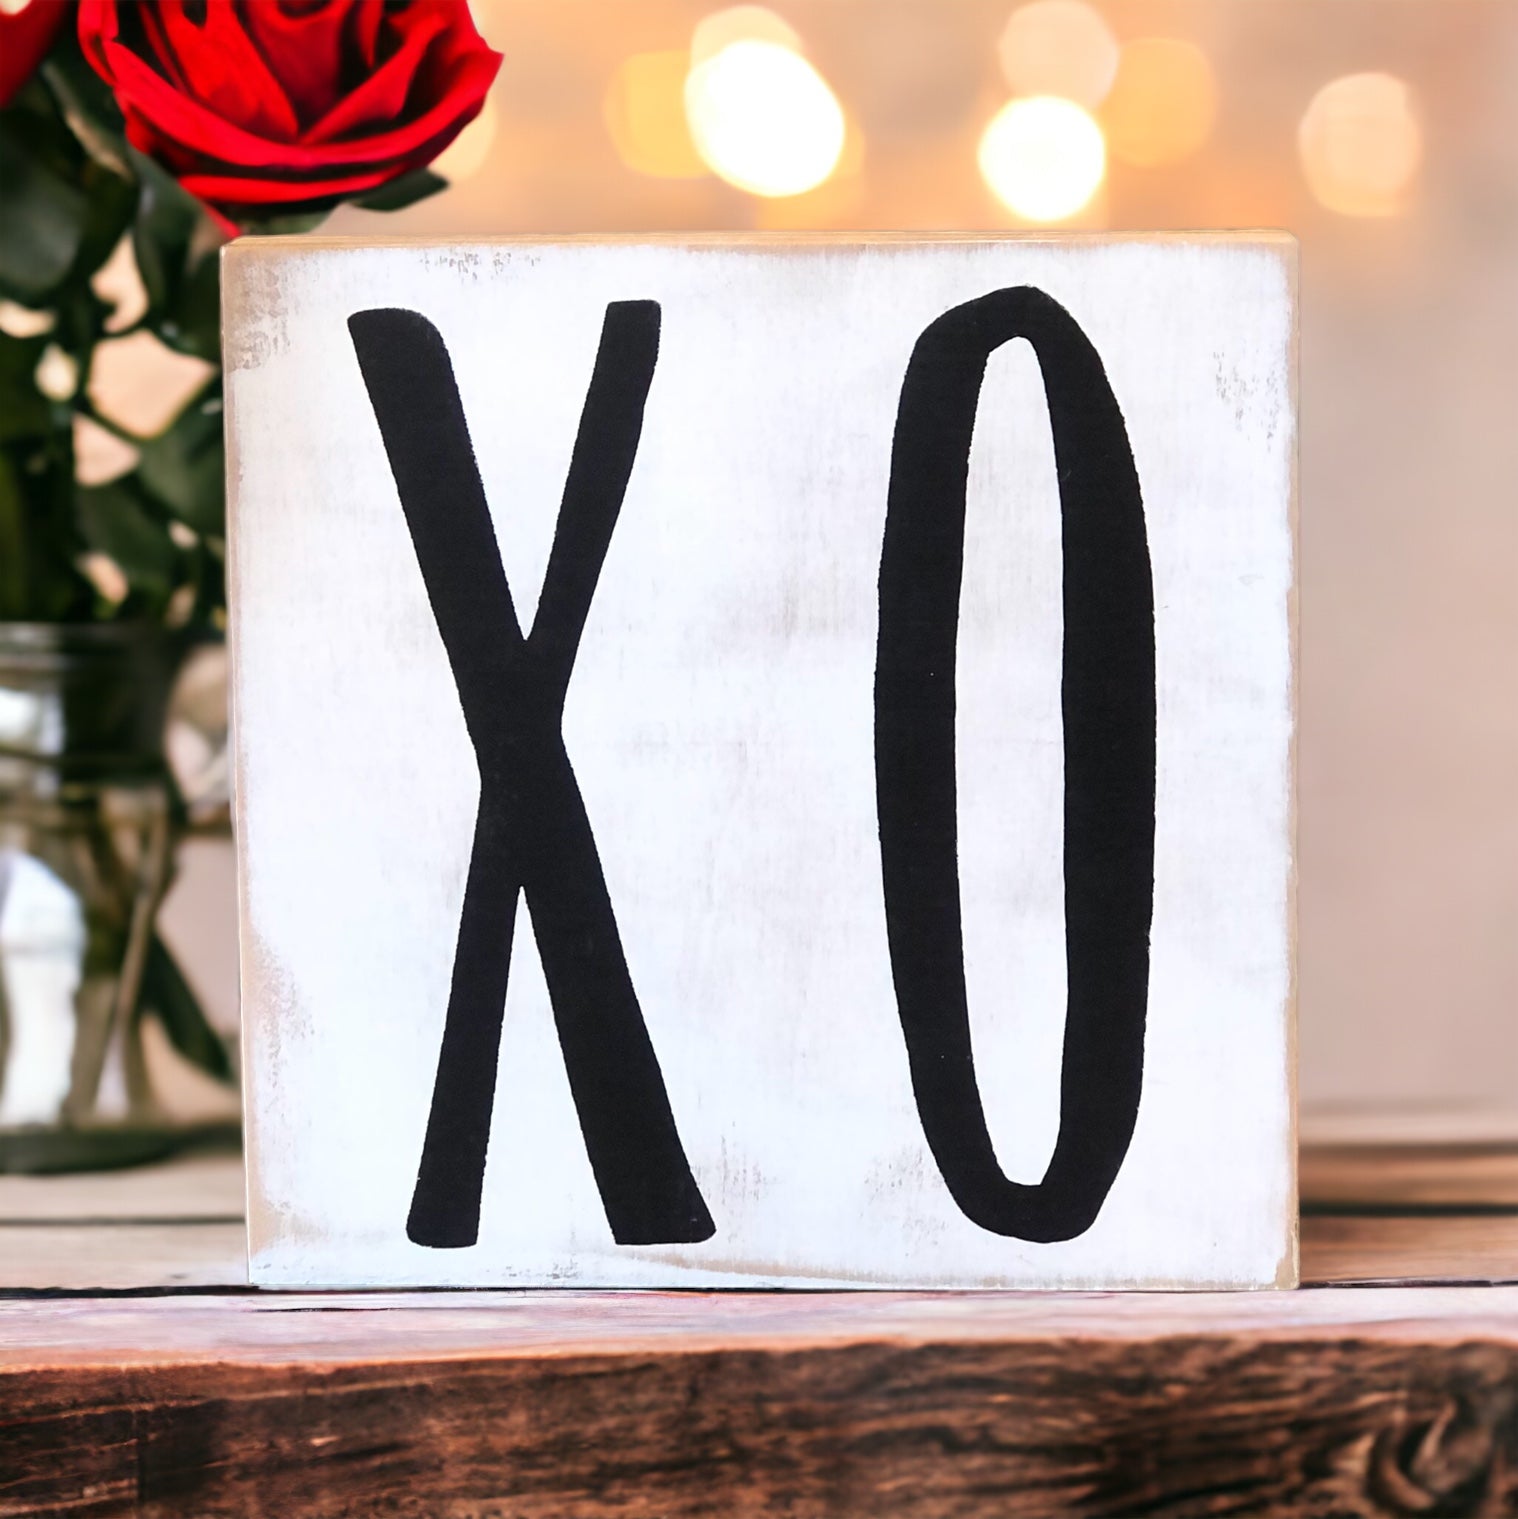 Black/White "XO" sign